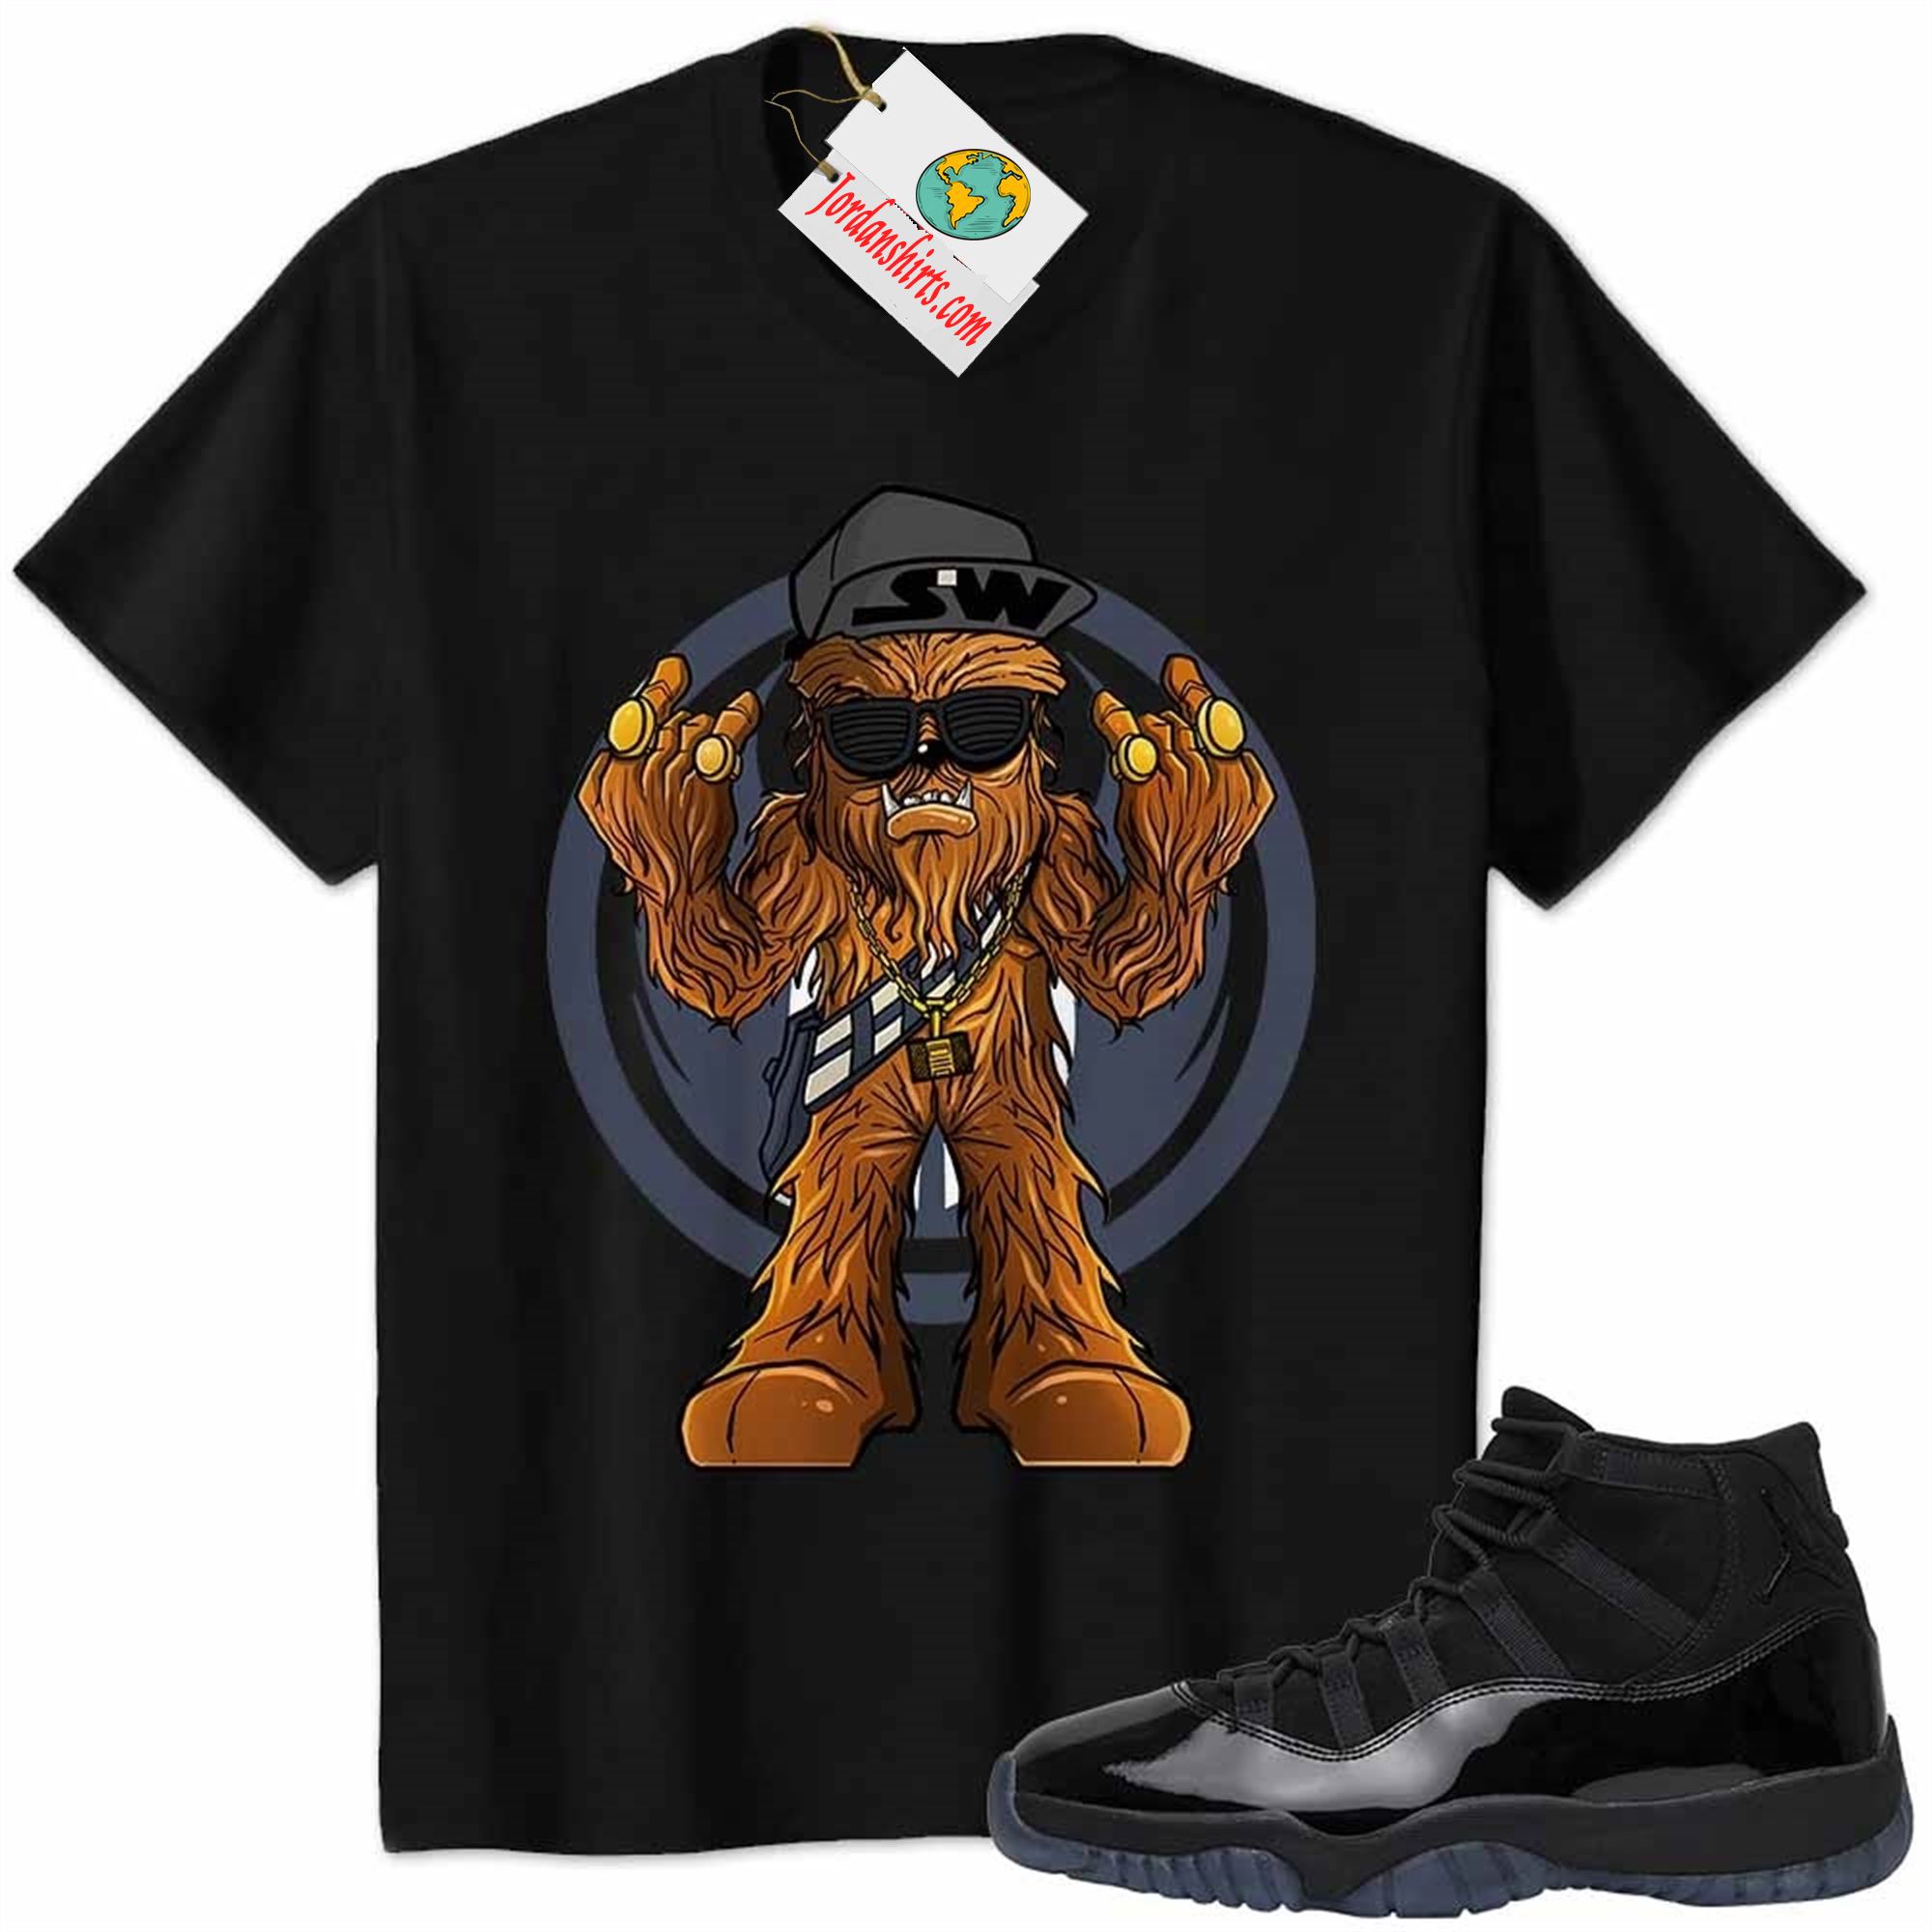 Jordan 11 Shirt, Gangster Chewbacca Stars War Black Air Jordan 11 Cap And Gown 11s Size Up To 5xl